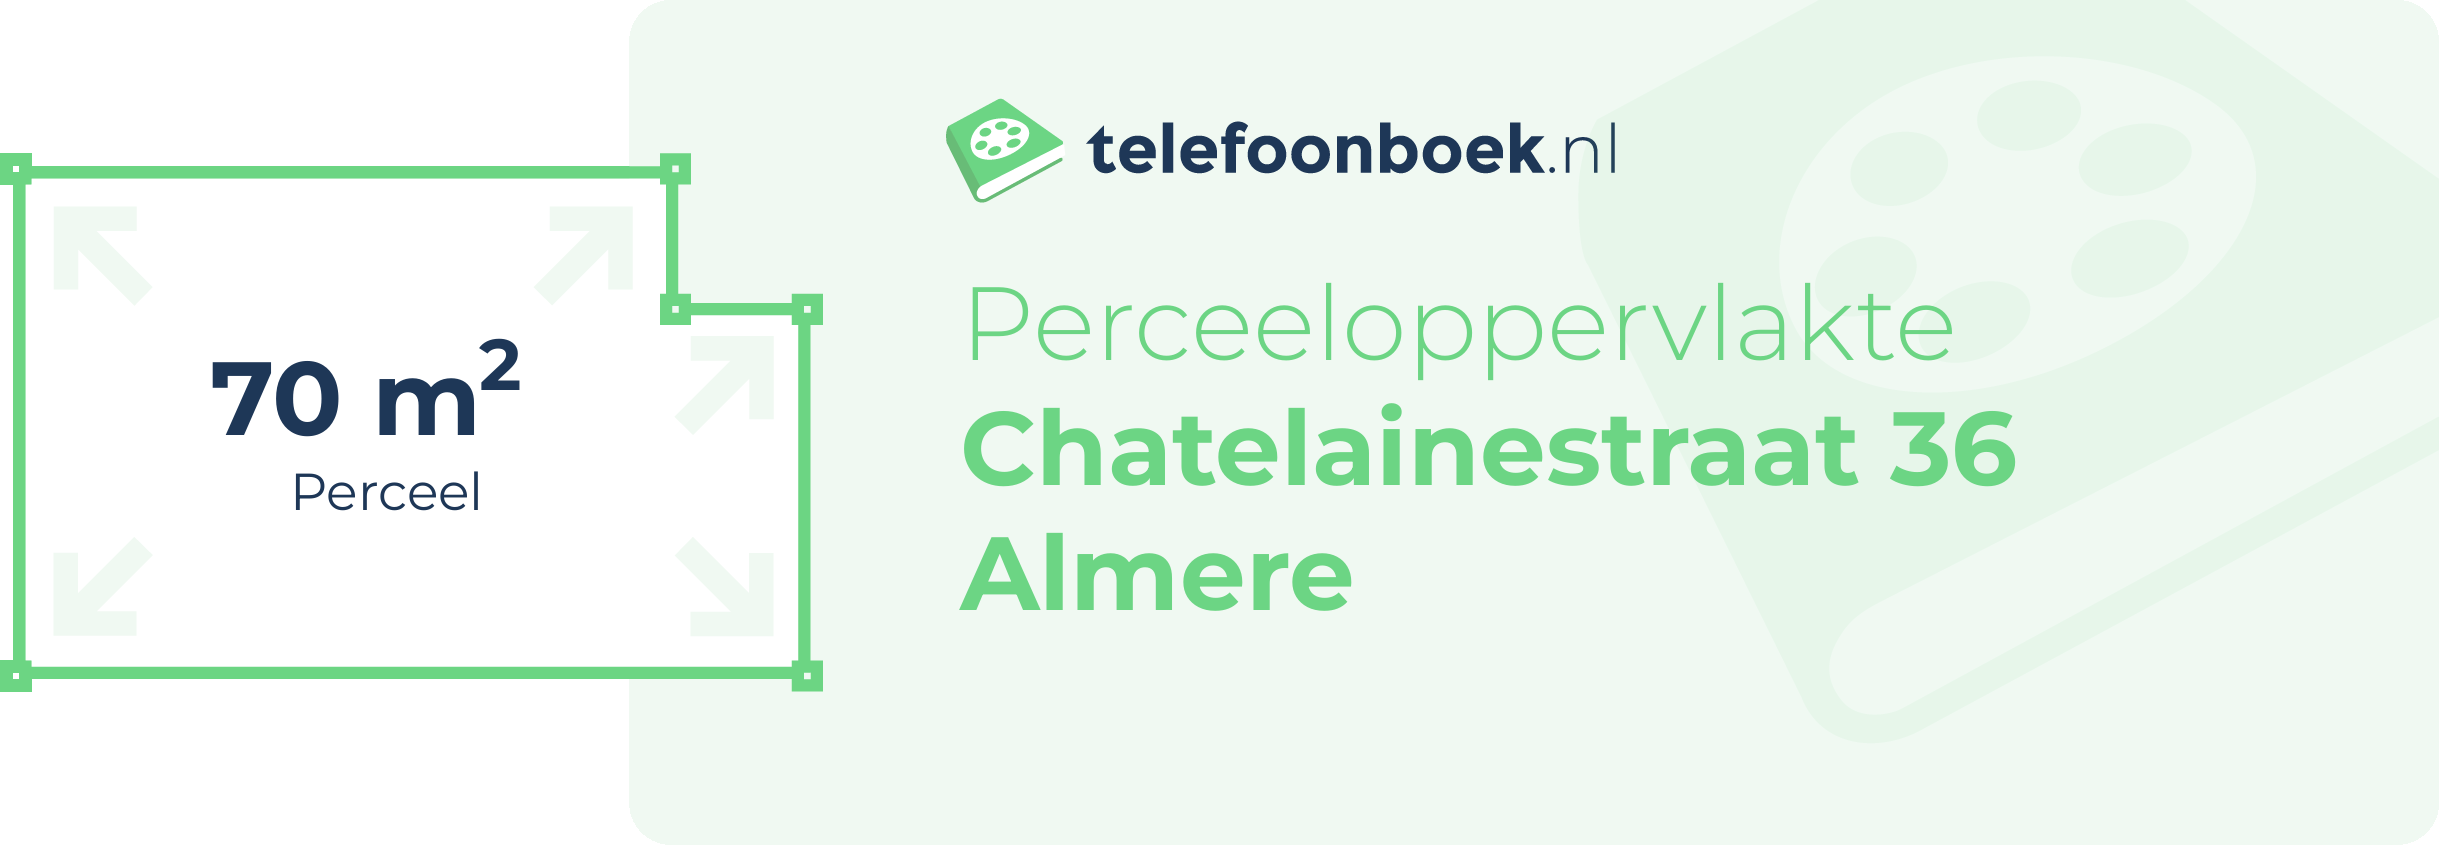 Perceeloppervlakte Chatelainestraat 36 Almere